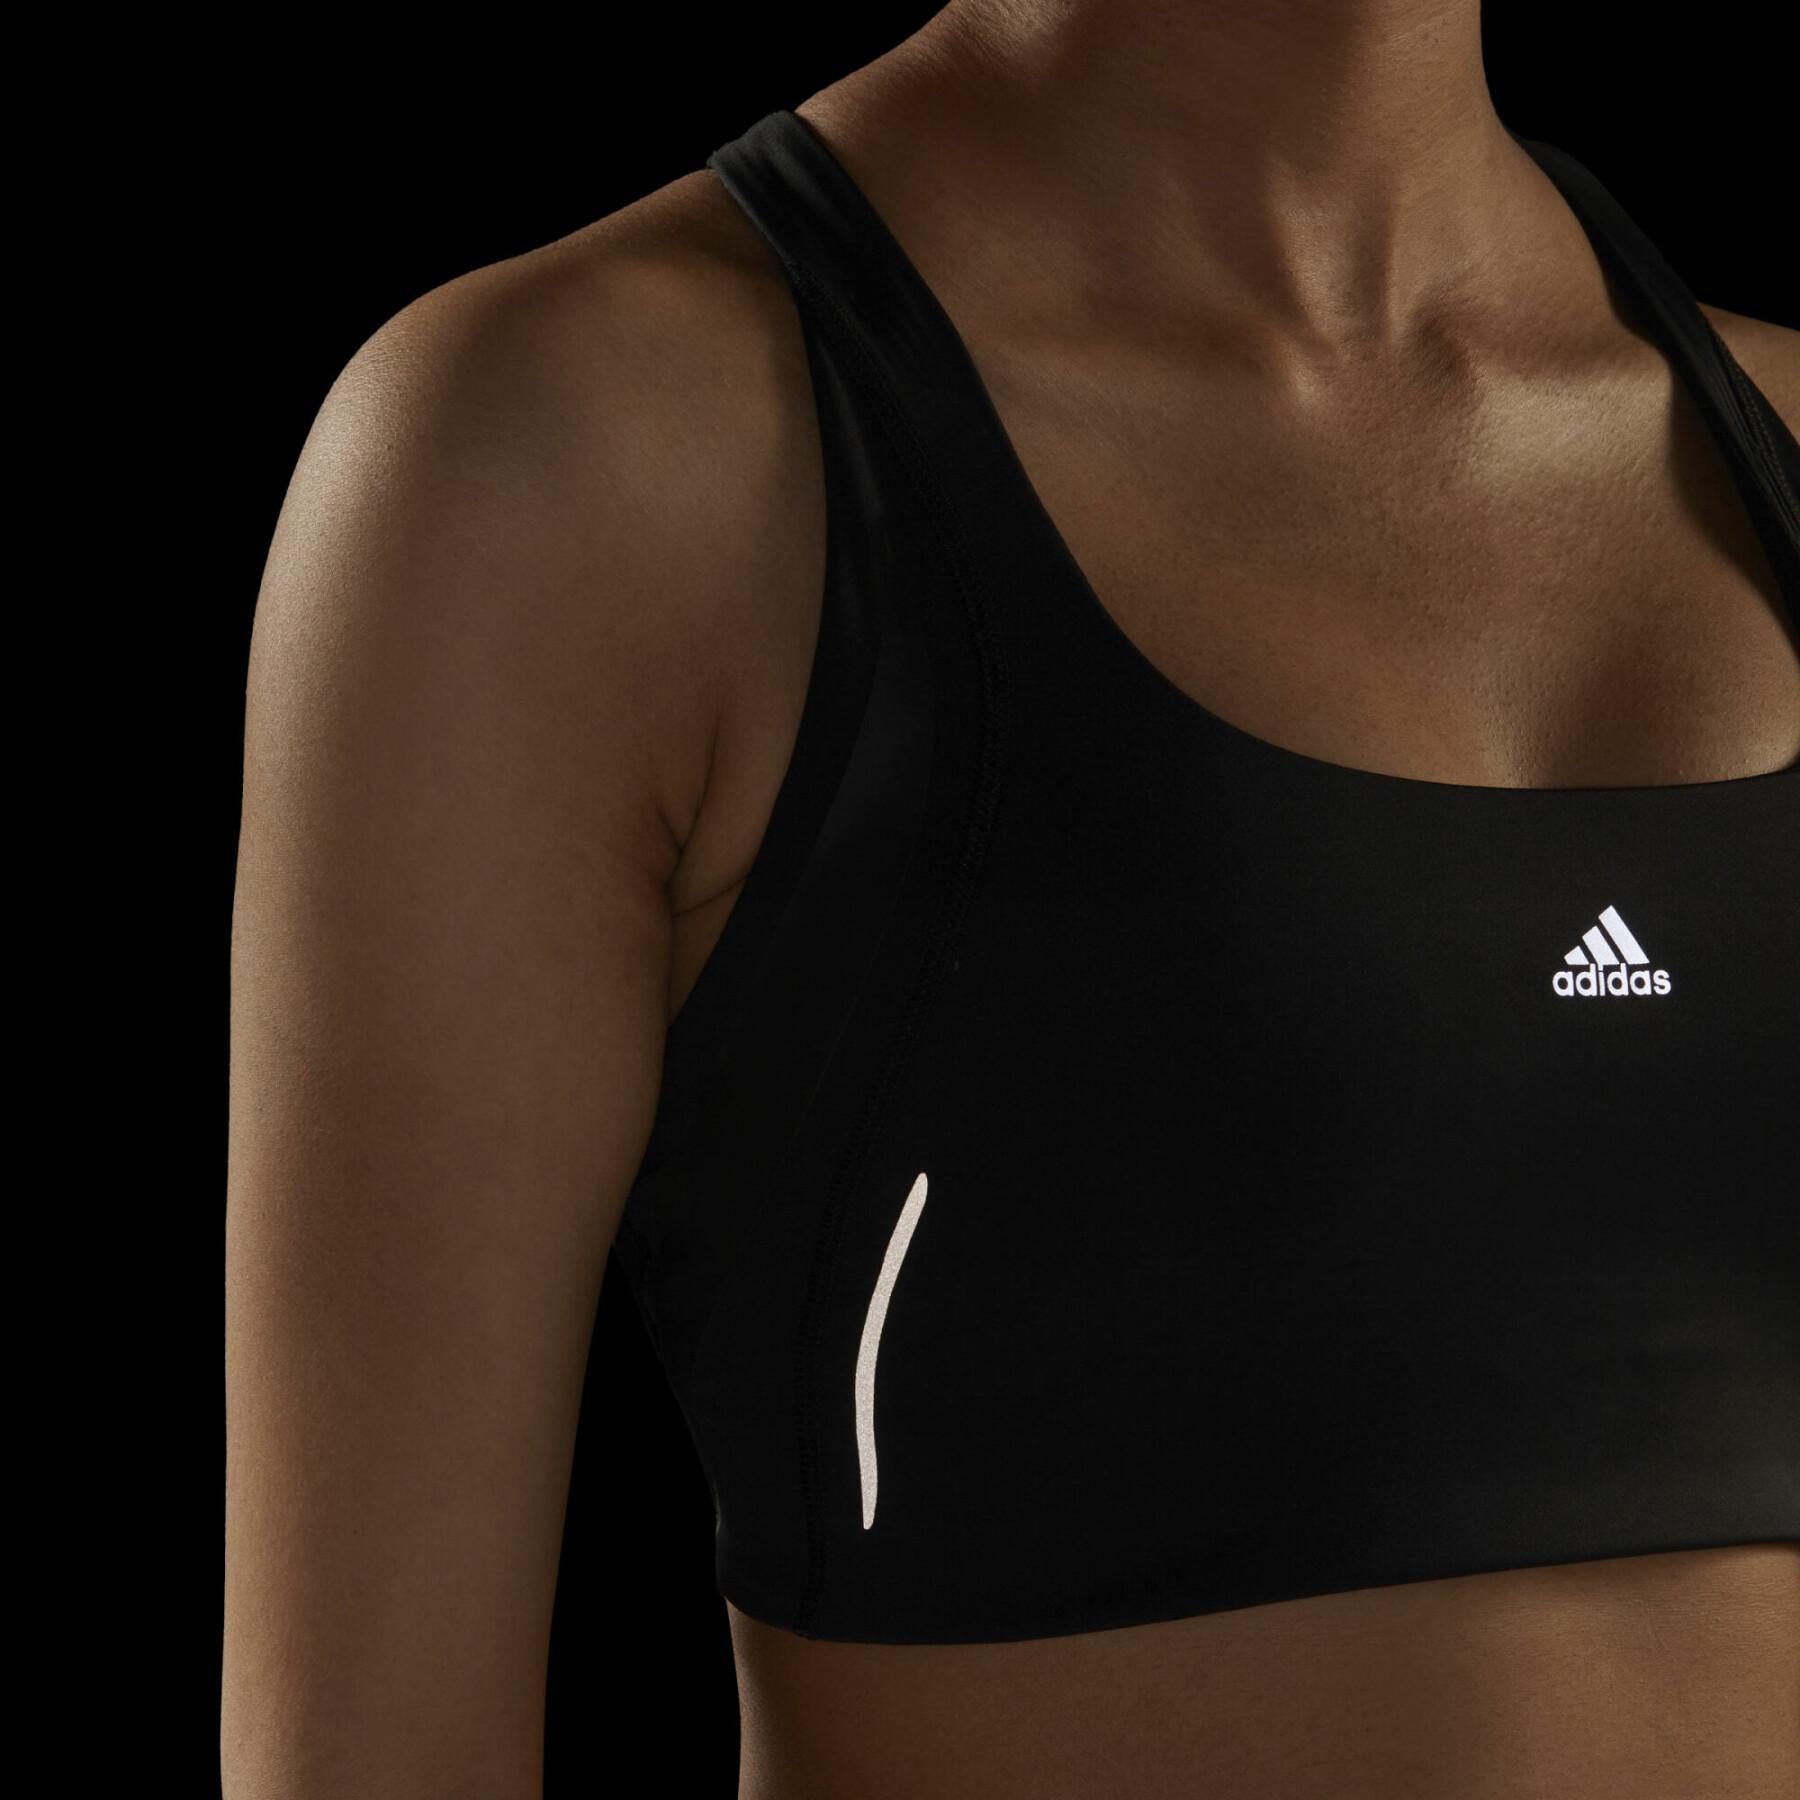 Medium support bra for women adidas Powerimpact Luxe HIIT